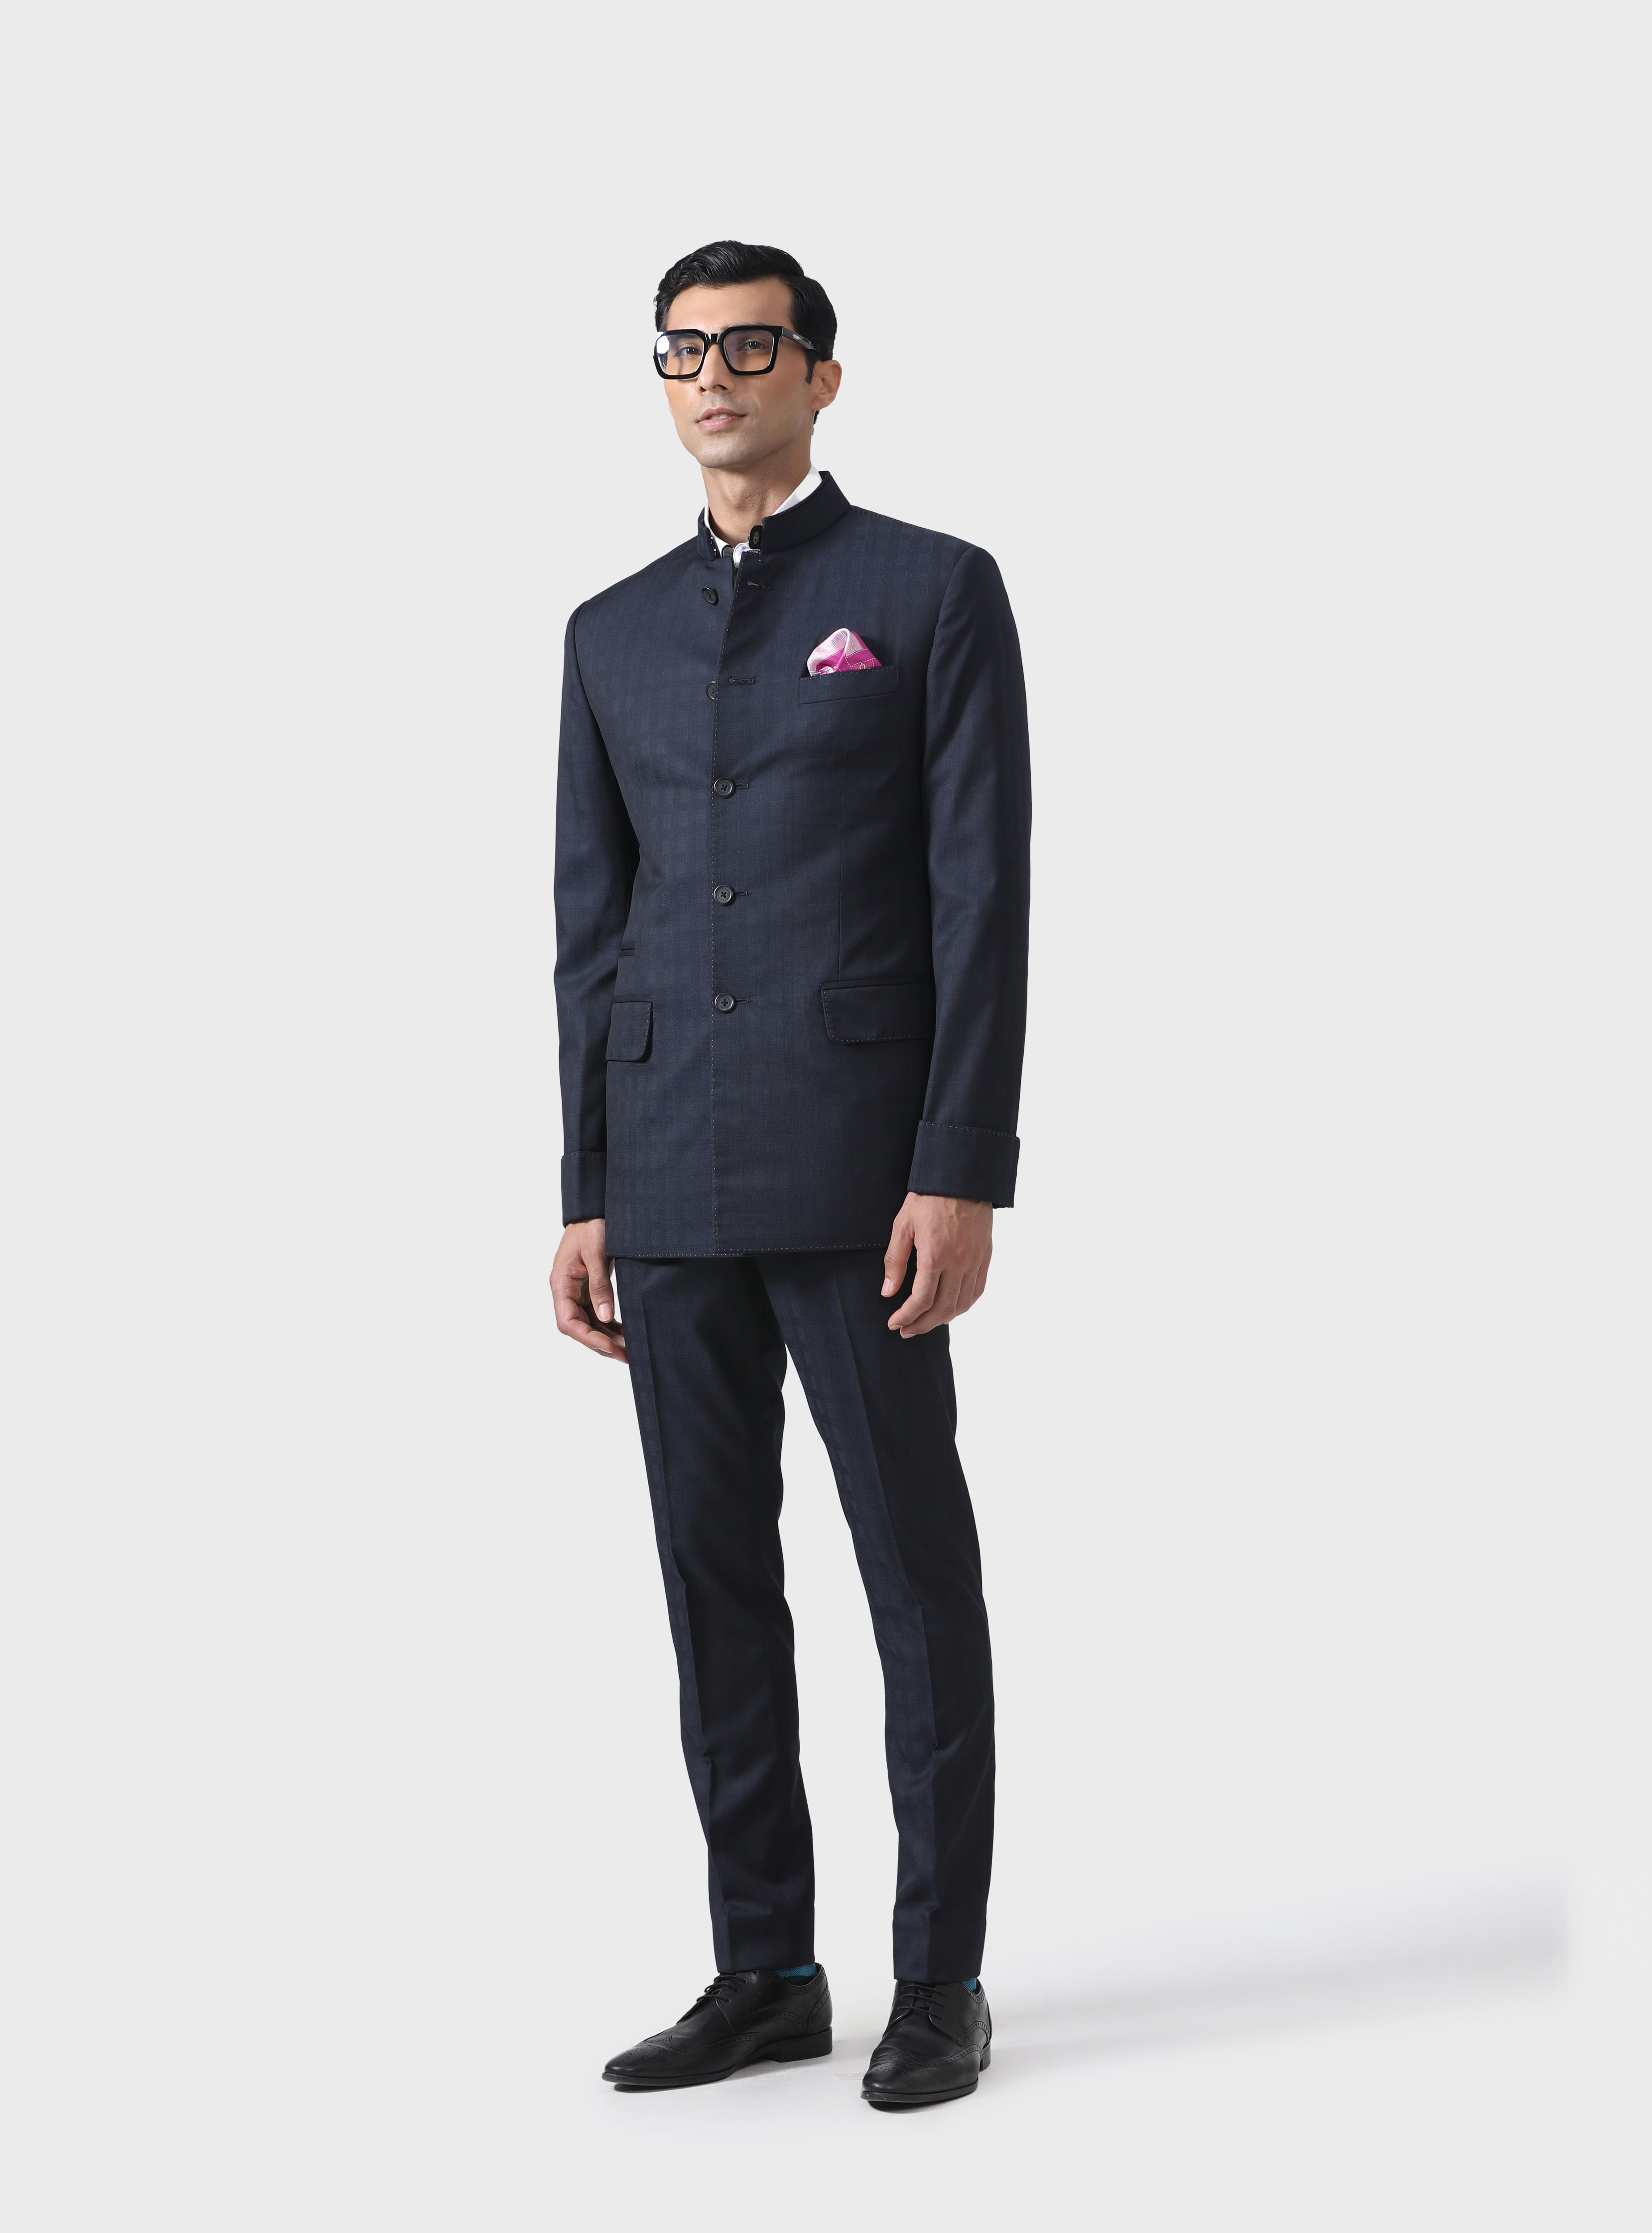 Trending Jodhpuri Suits For Men to Make Perfect Fashion Statement